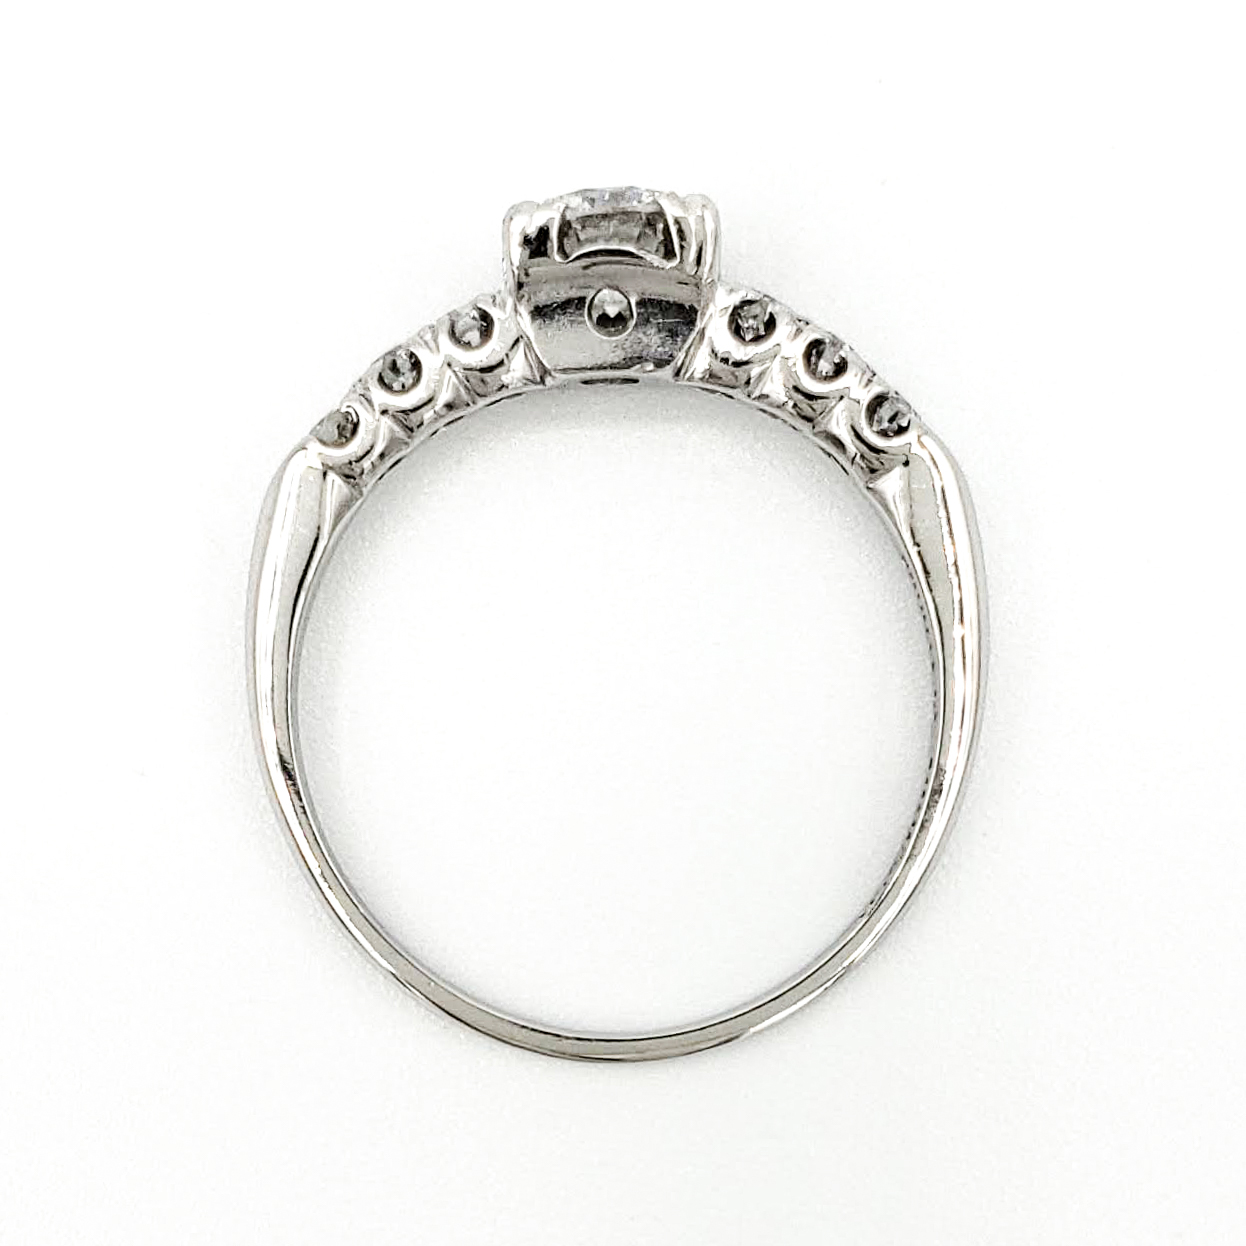 vintage-platinum-engagement-ring-with-0-52-carat-round-brilliant-cut-diamond-egl-e-si1